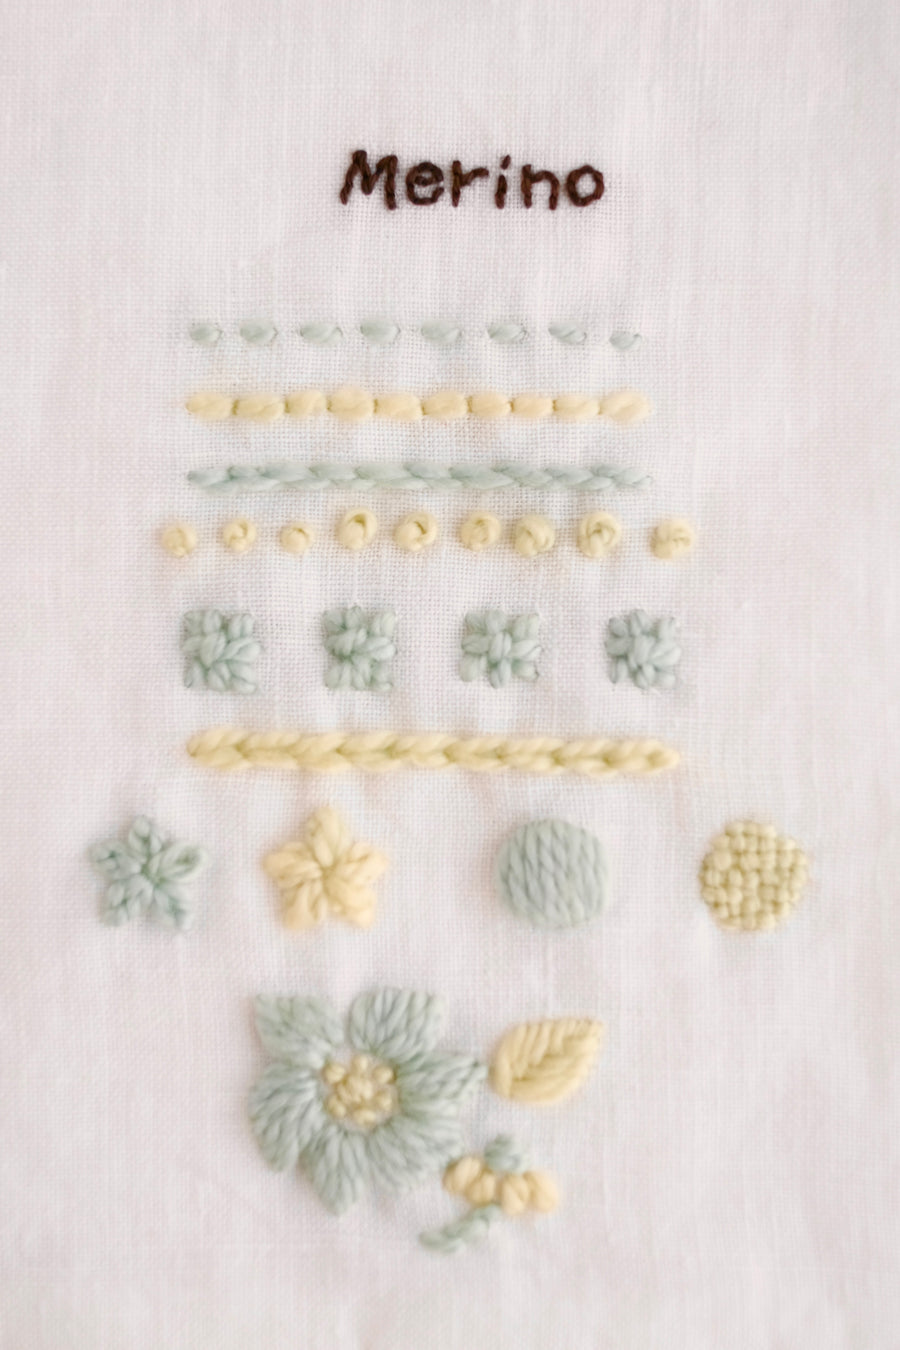 HiROMi FUJIMOTO Embroidery Thread Box Set